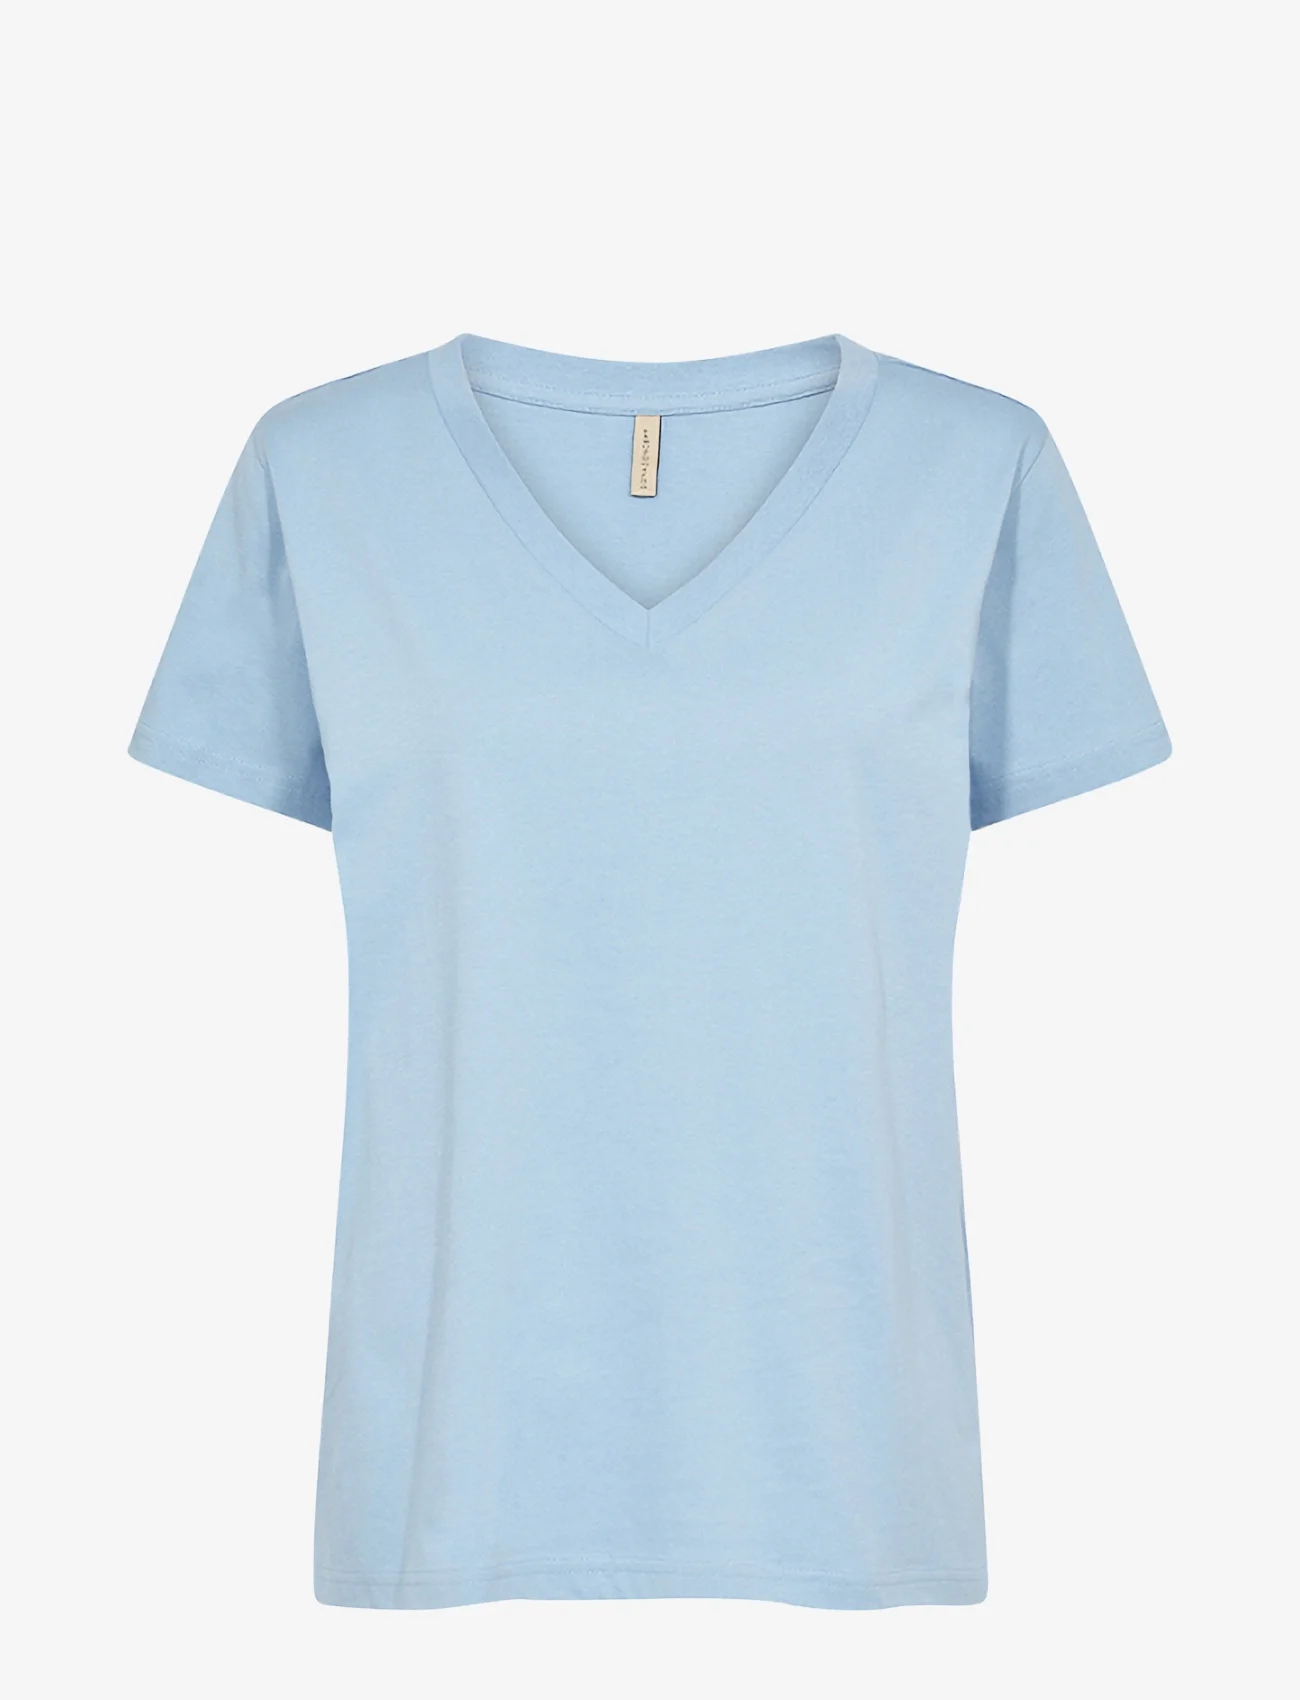 Soyaconcept - SC-DERBY - t-shirt & tops - crystal blue - 1